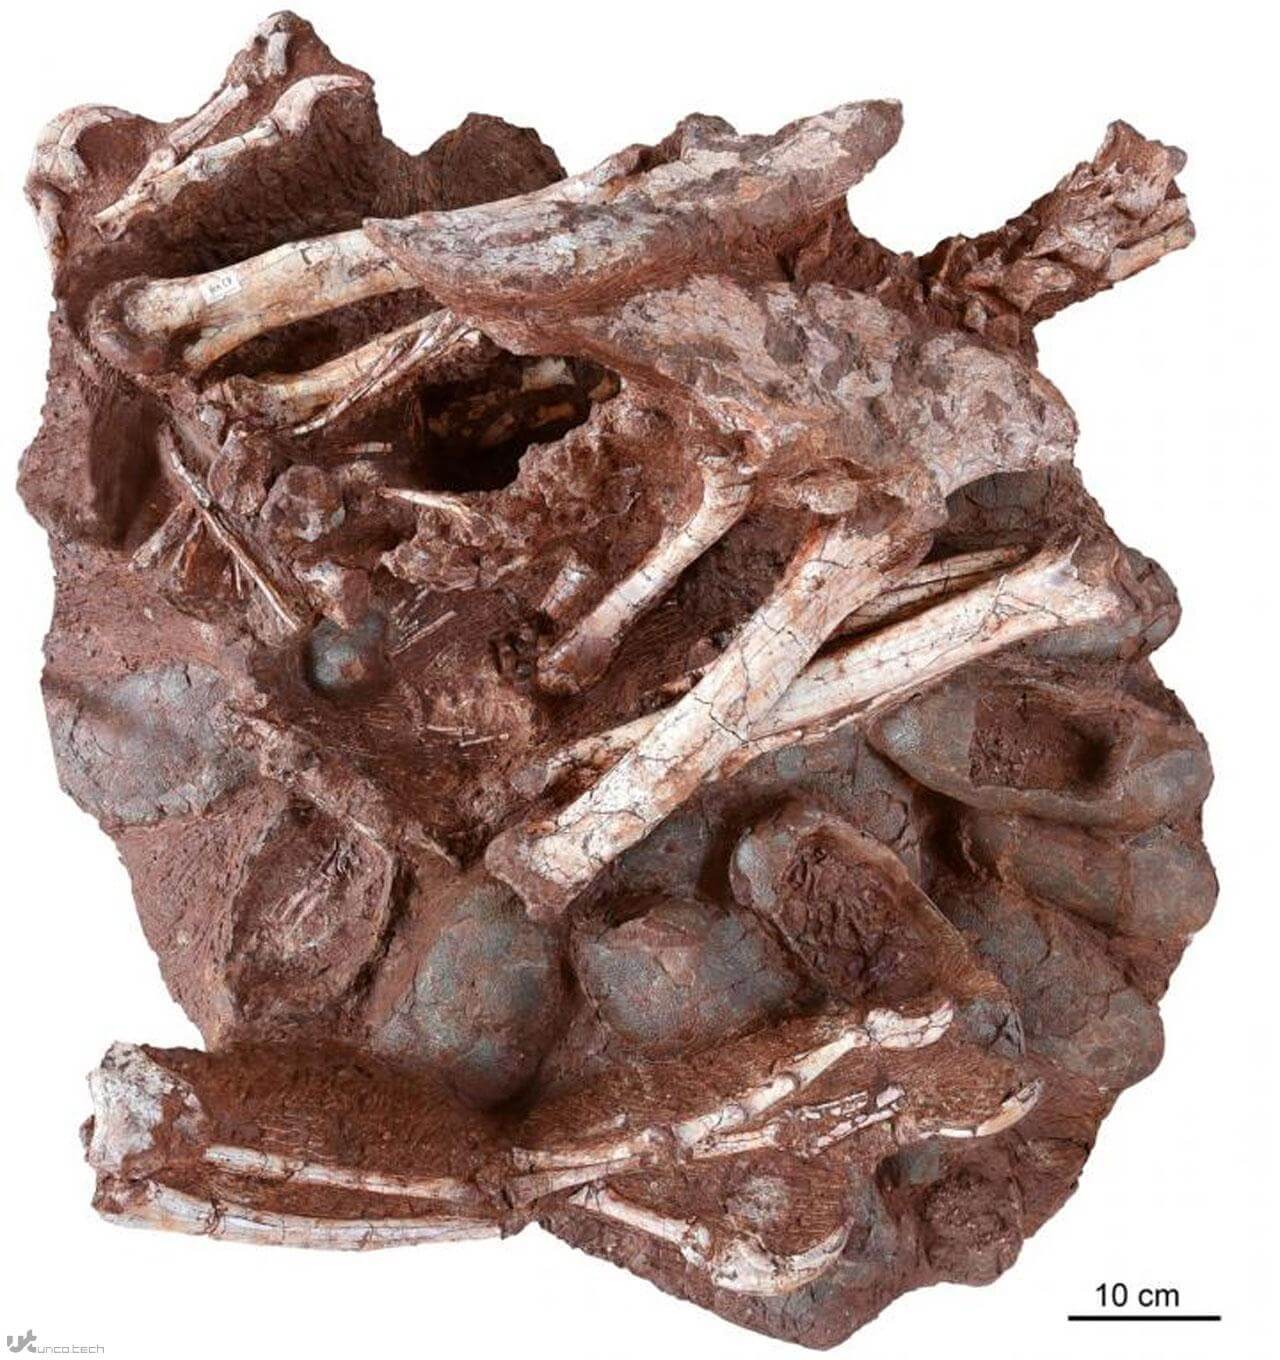 1615580337 dino bird 2 - محققان فسیل دایناسور پرنده مانندی را نشسته بر روی تخم های فسیل شده کشف کرده اند